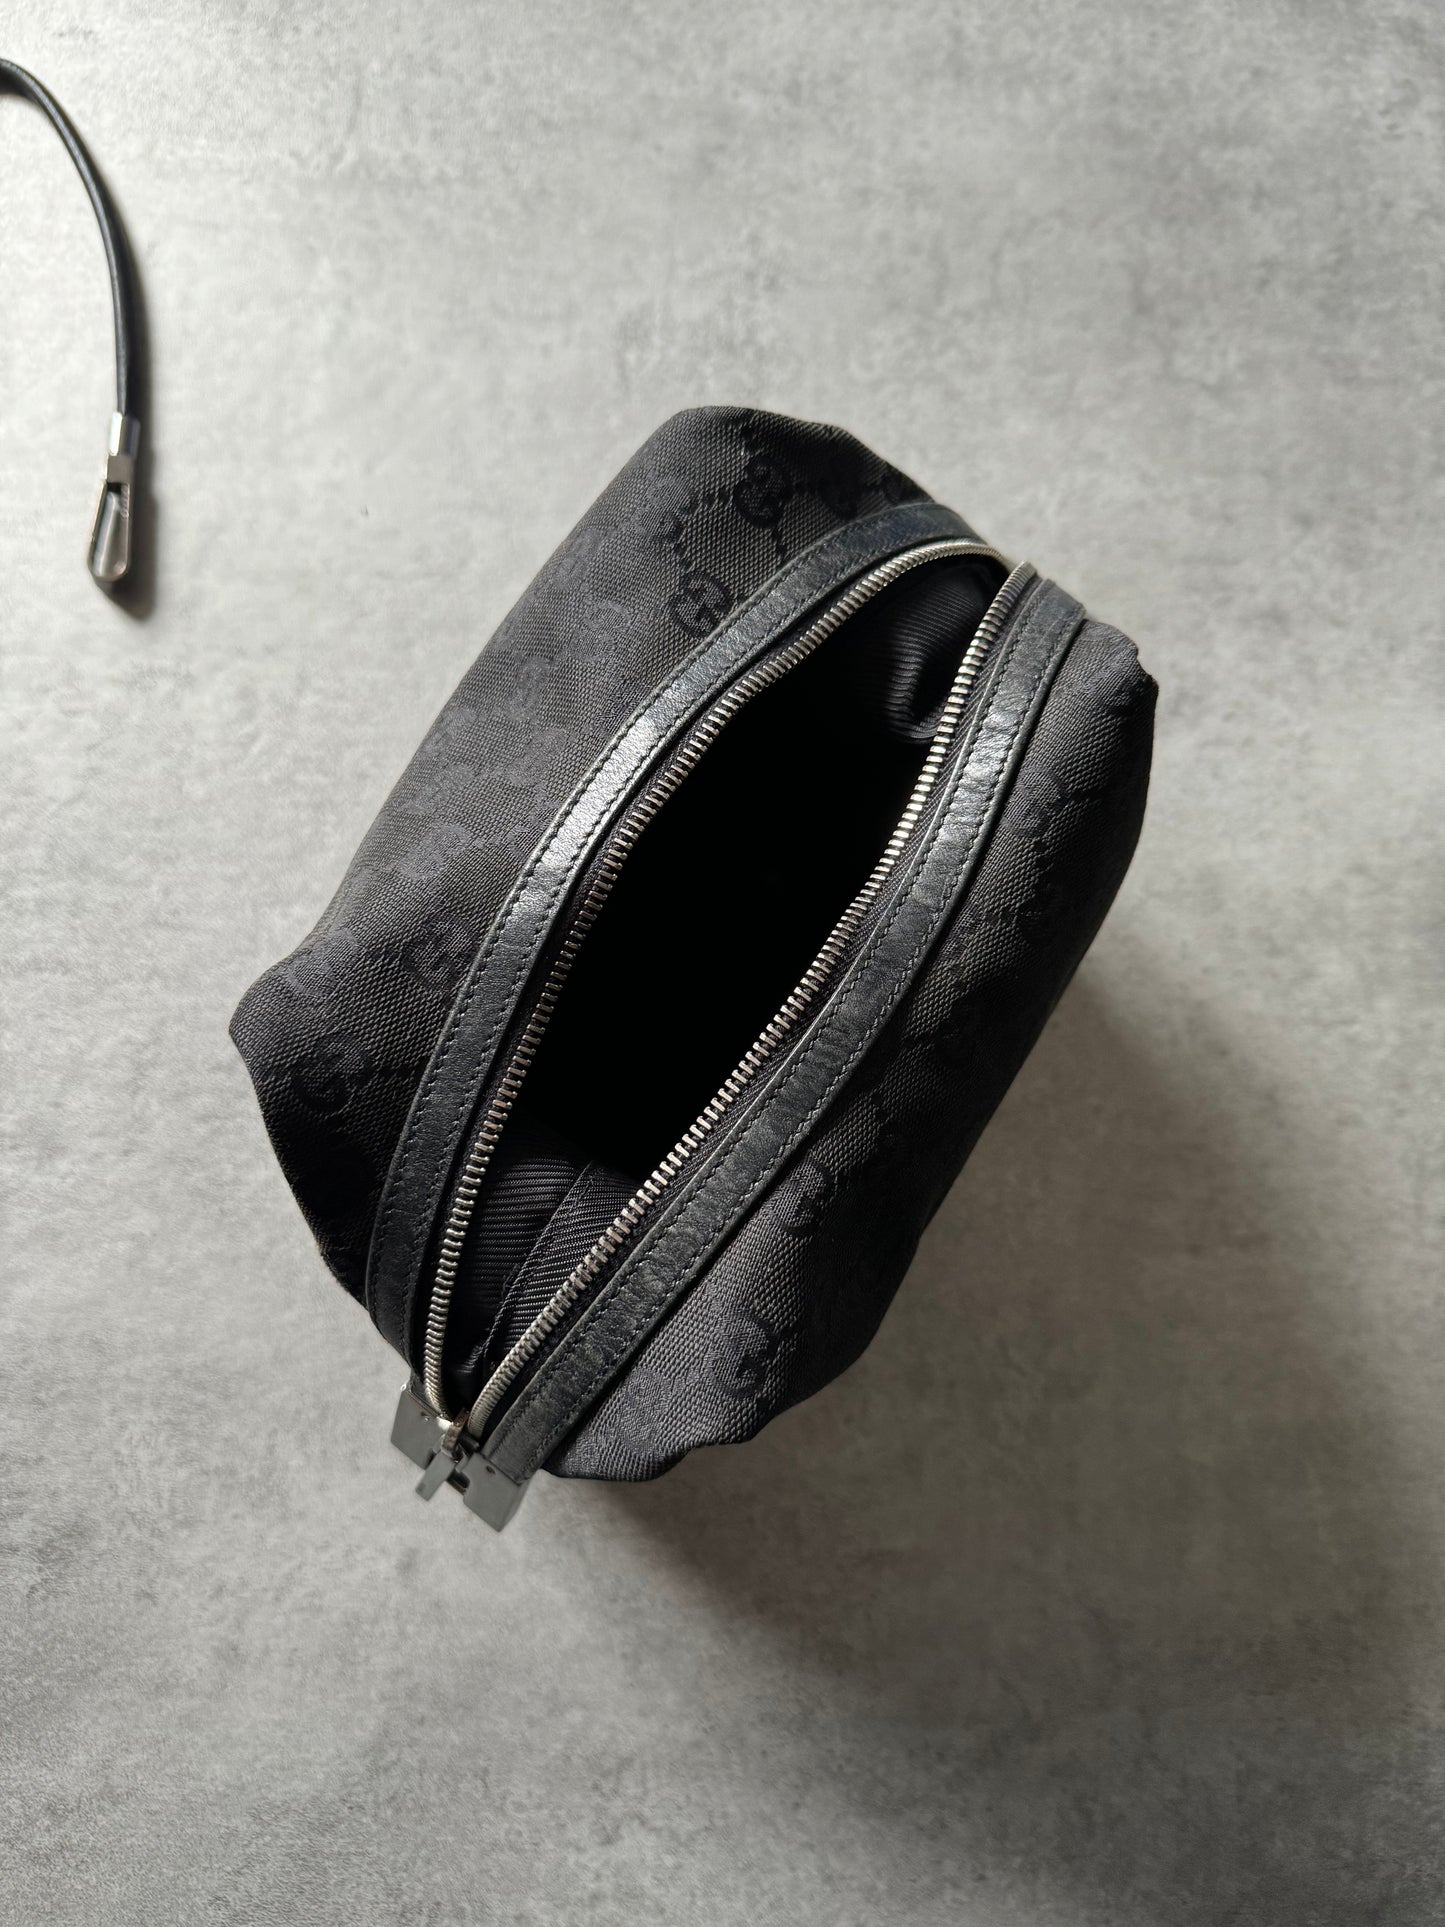 FW2002 Gucci Black Monogrammed Black Bag by Tom Ford (OS) - 4